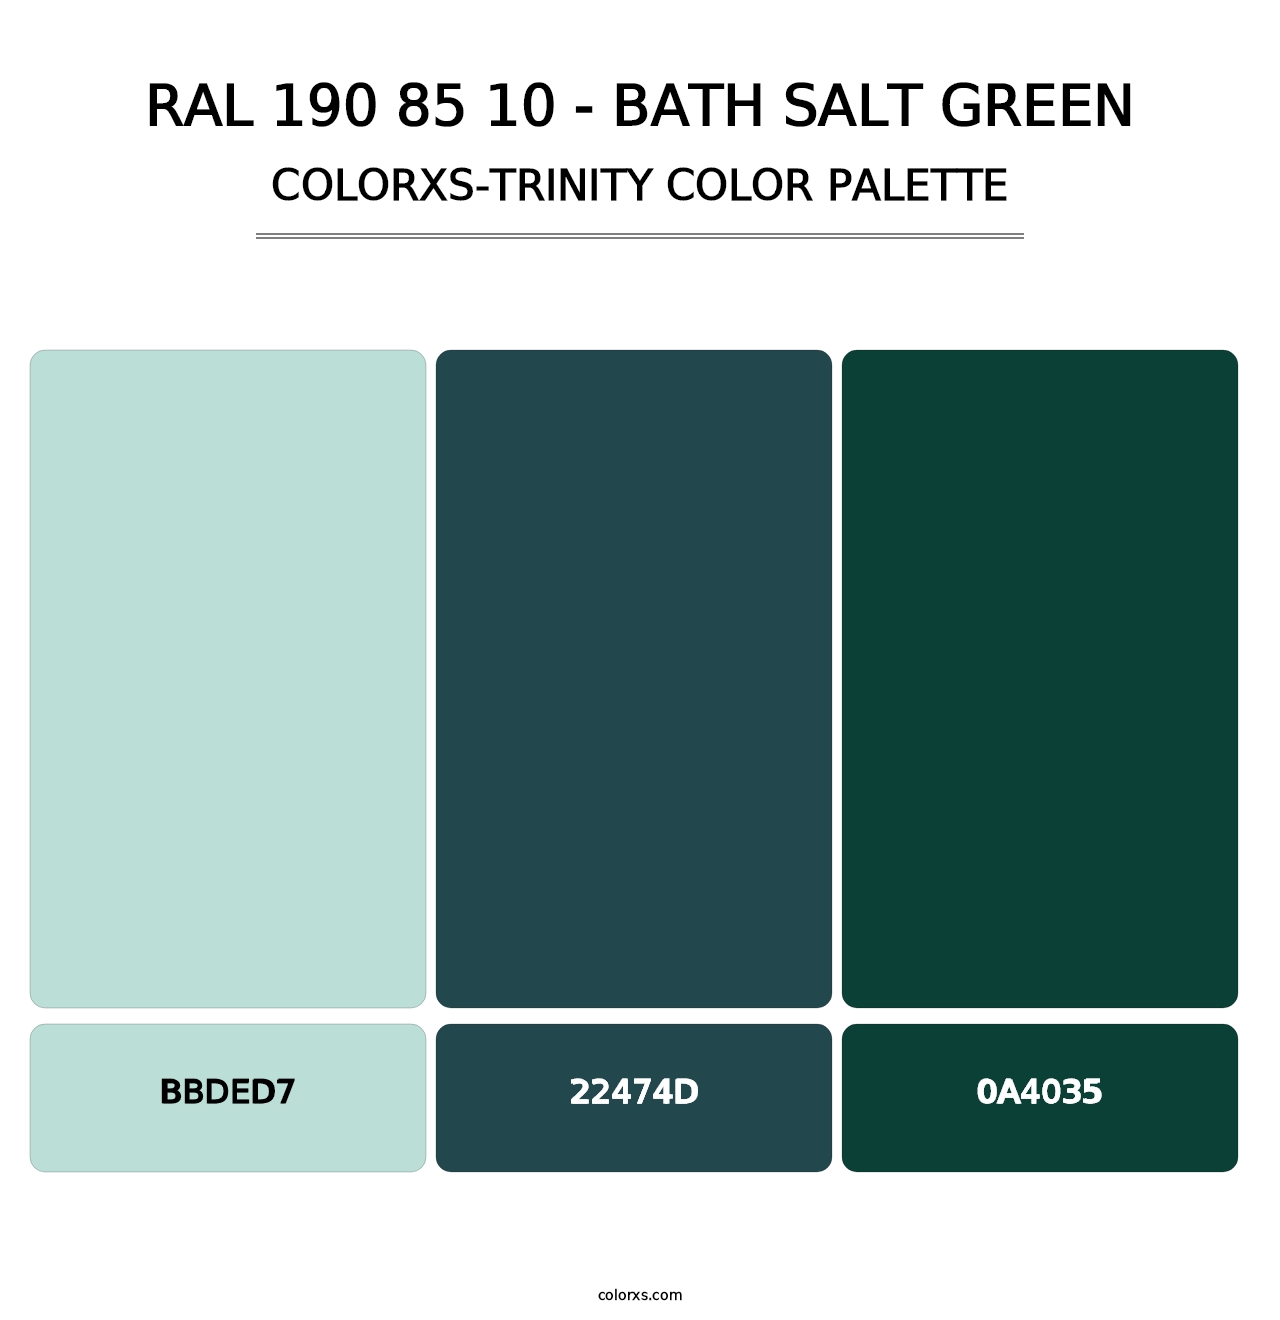 RAL 190 85 10 - Bath Salt Green - Colorxs Trinity Palette